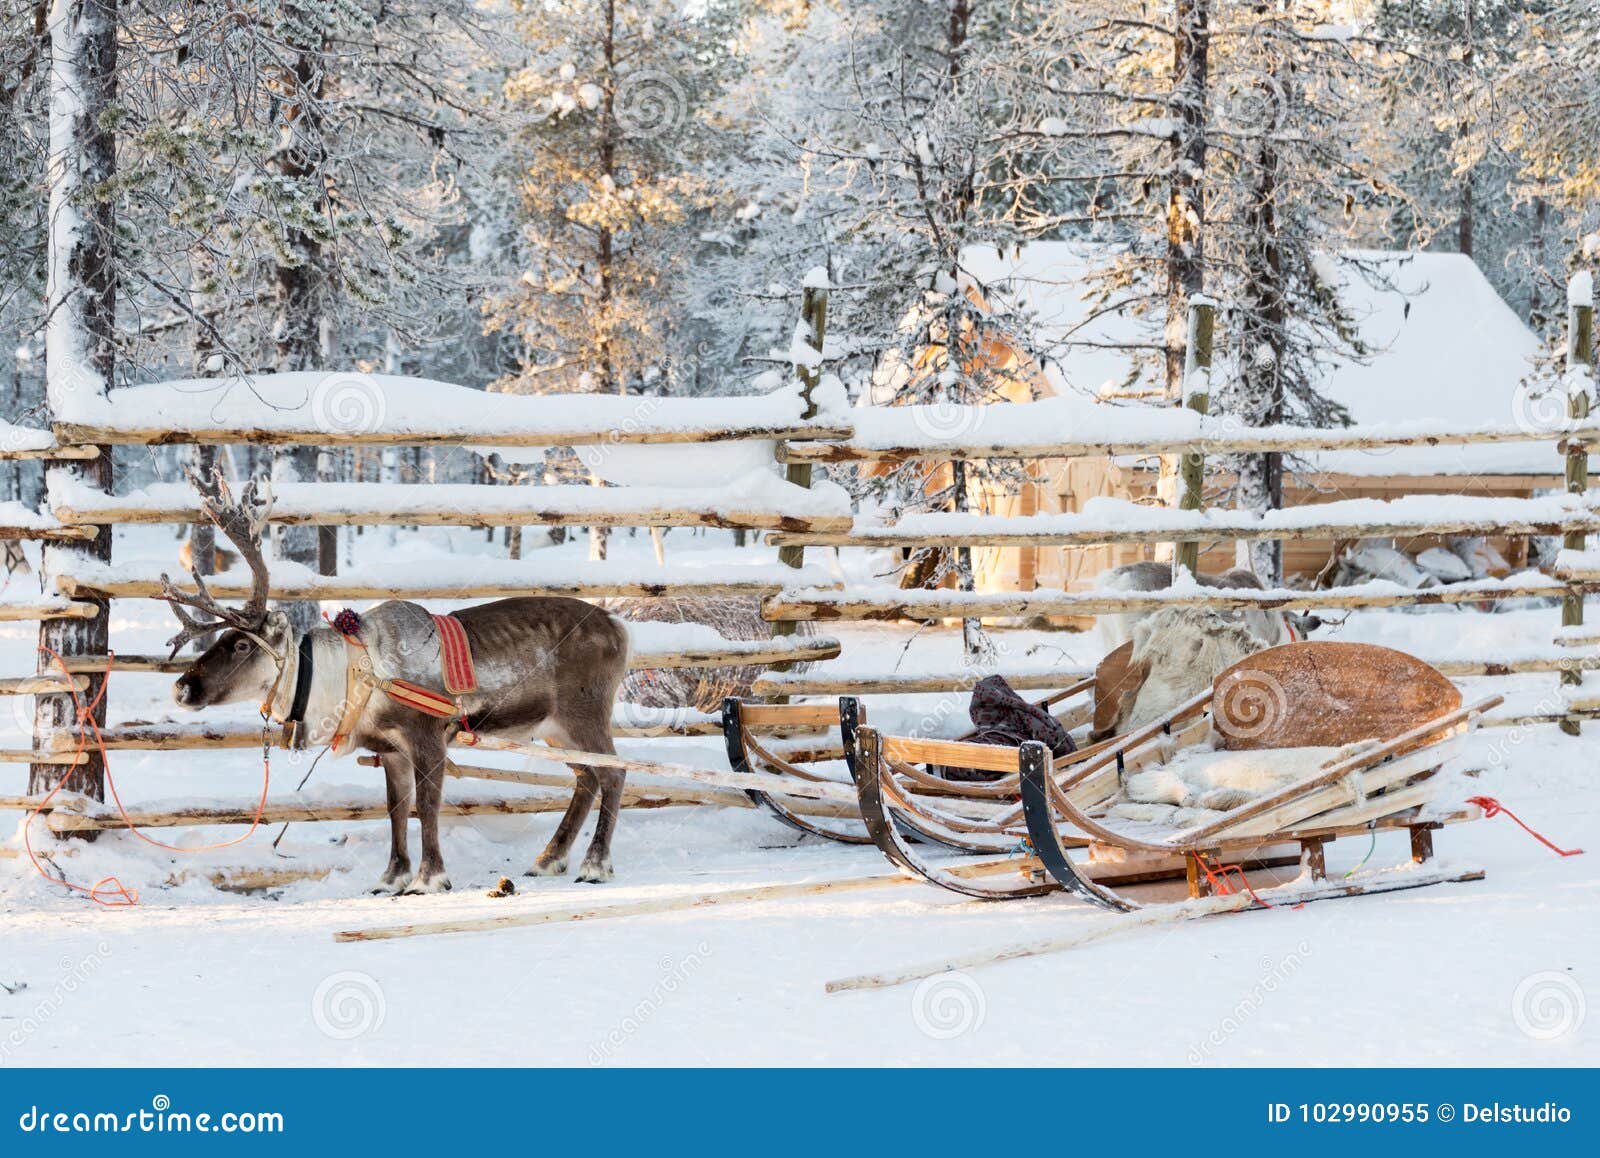 reindeer sledge, in winter, lapland finland